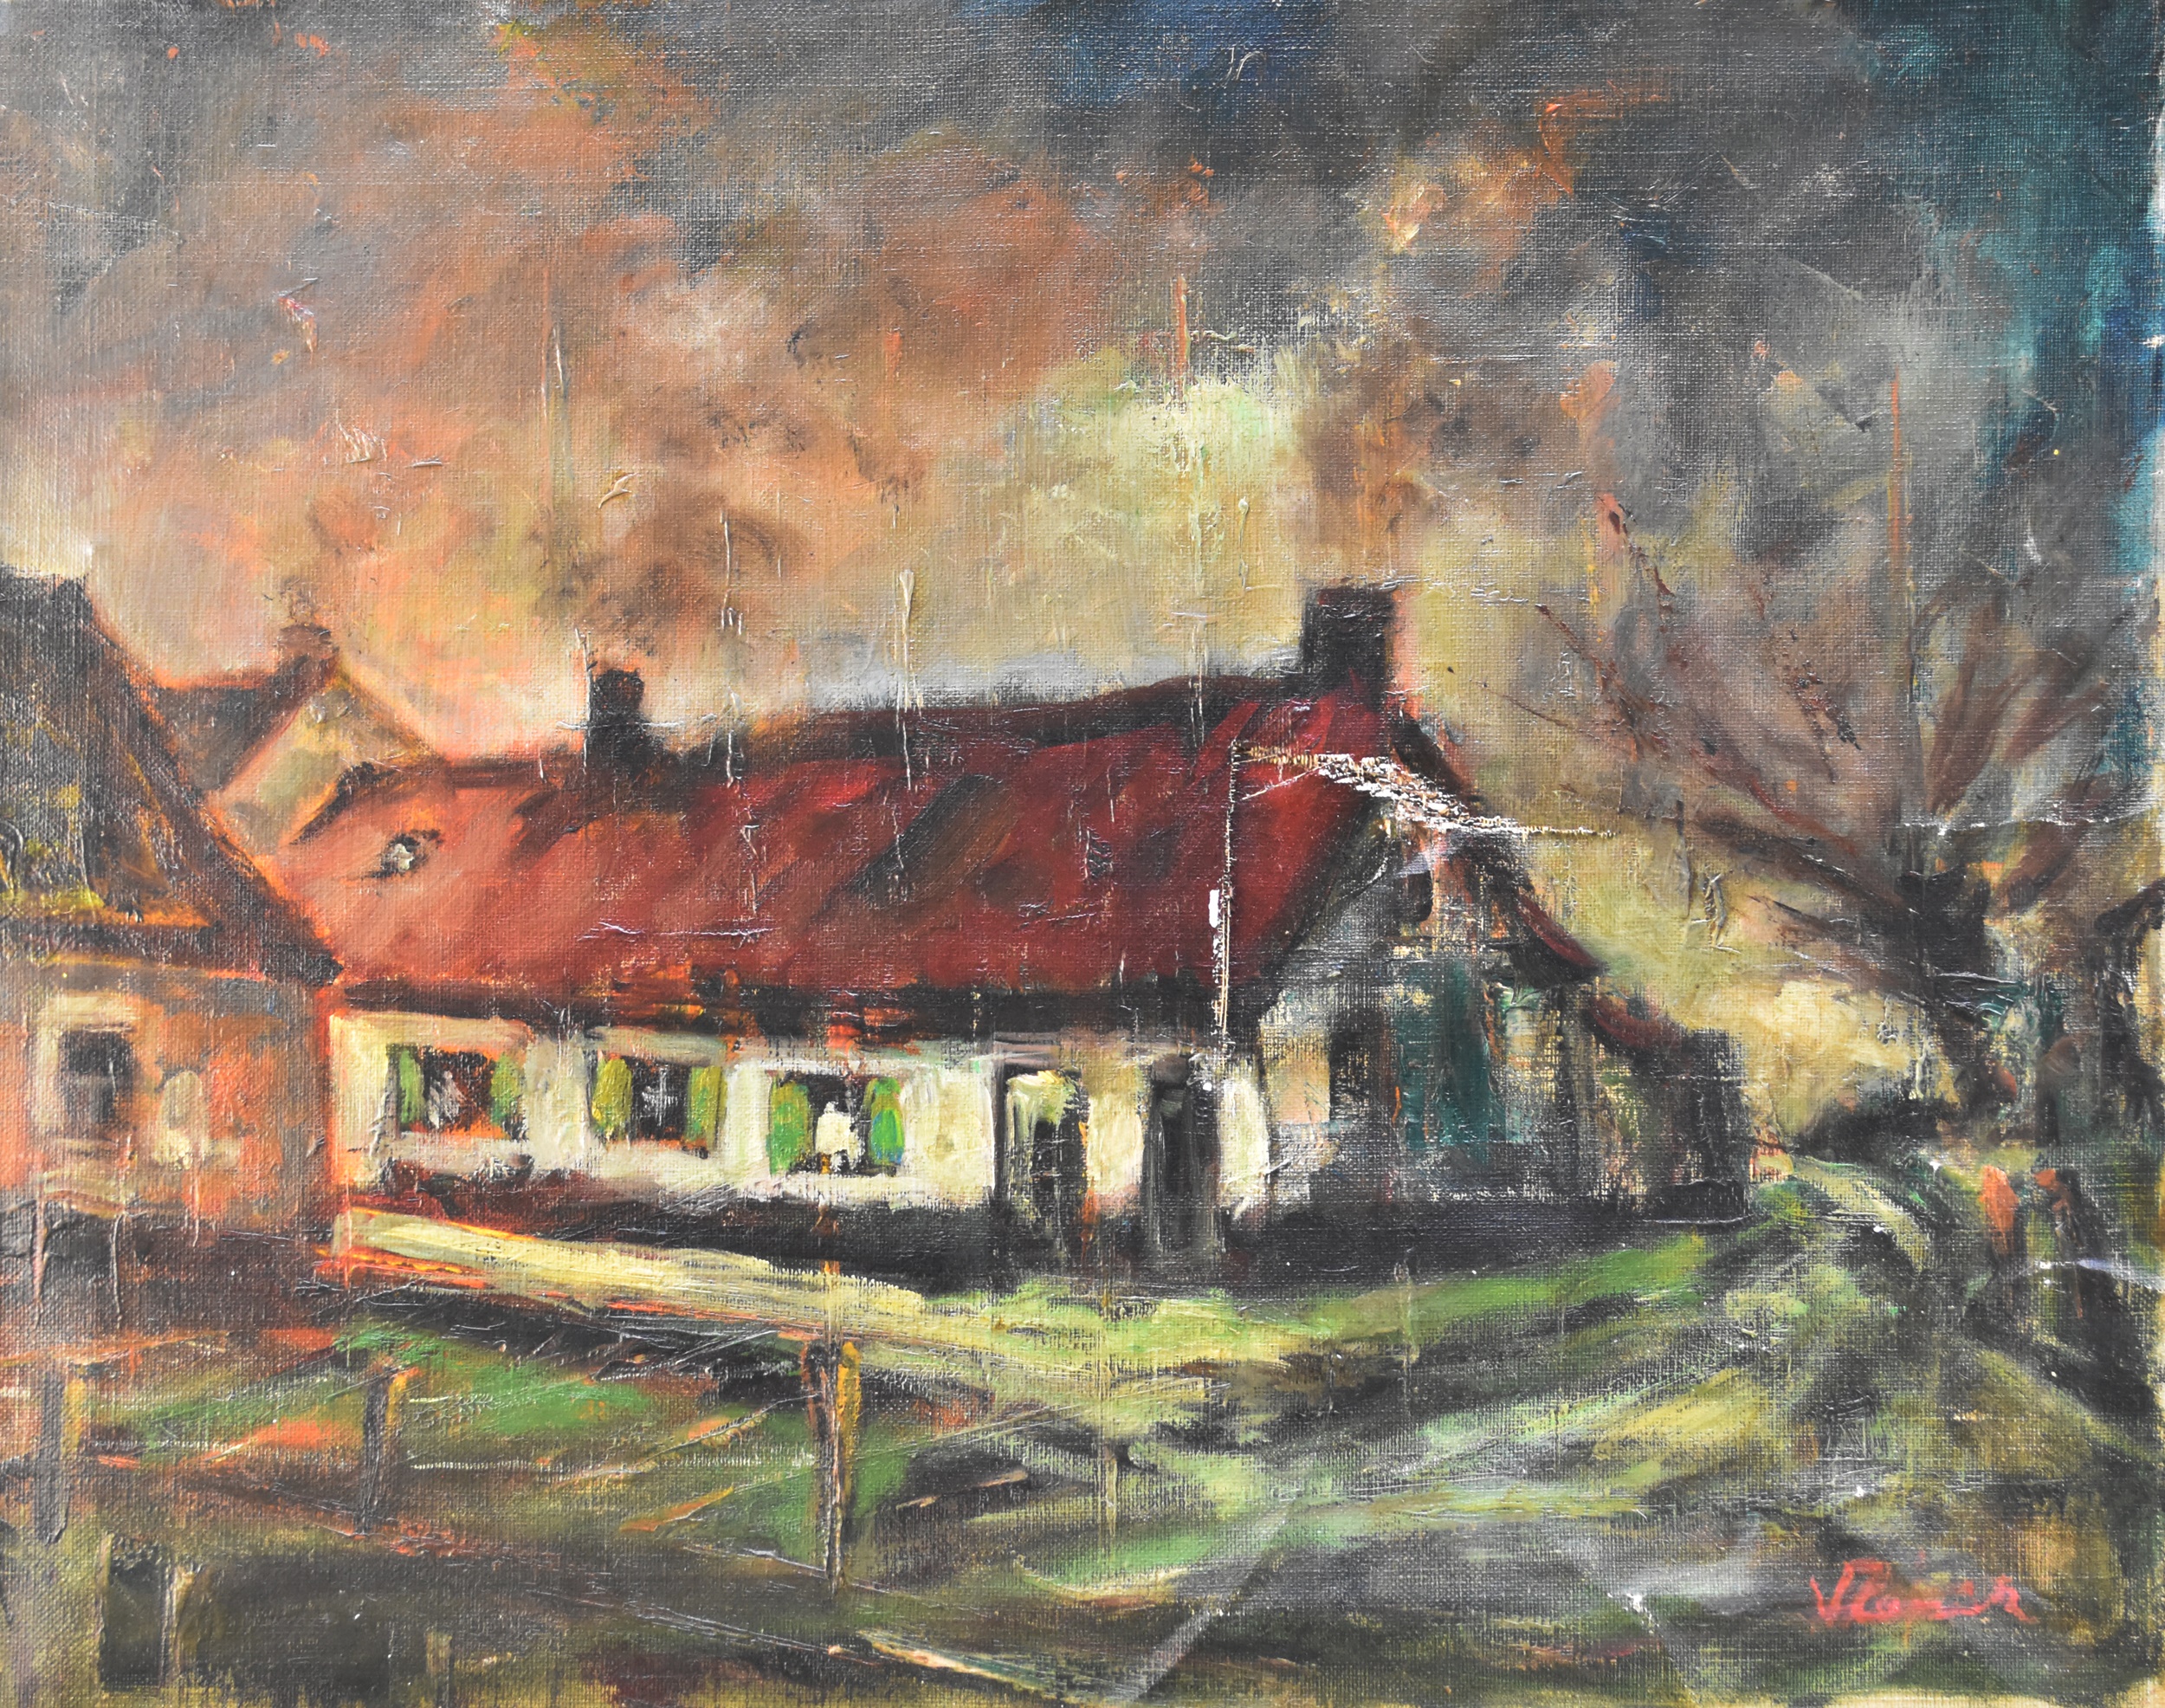 R Coxon (British School 20th Century) Waterside cottage, oil on canvas, measurements 65 x 81 cm,